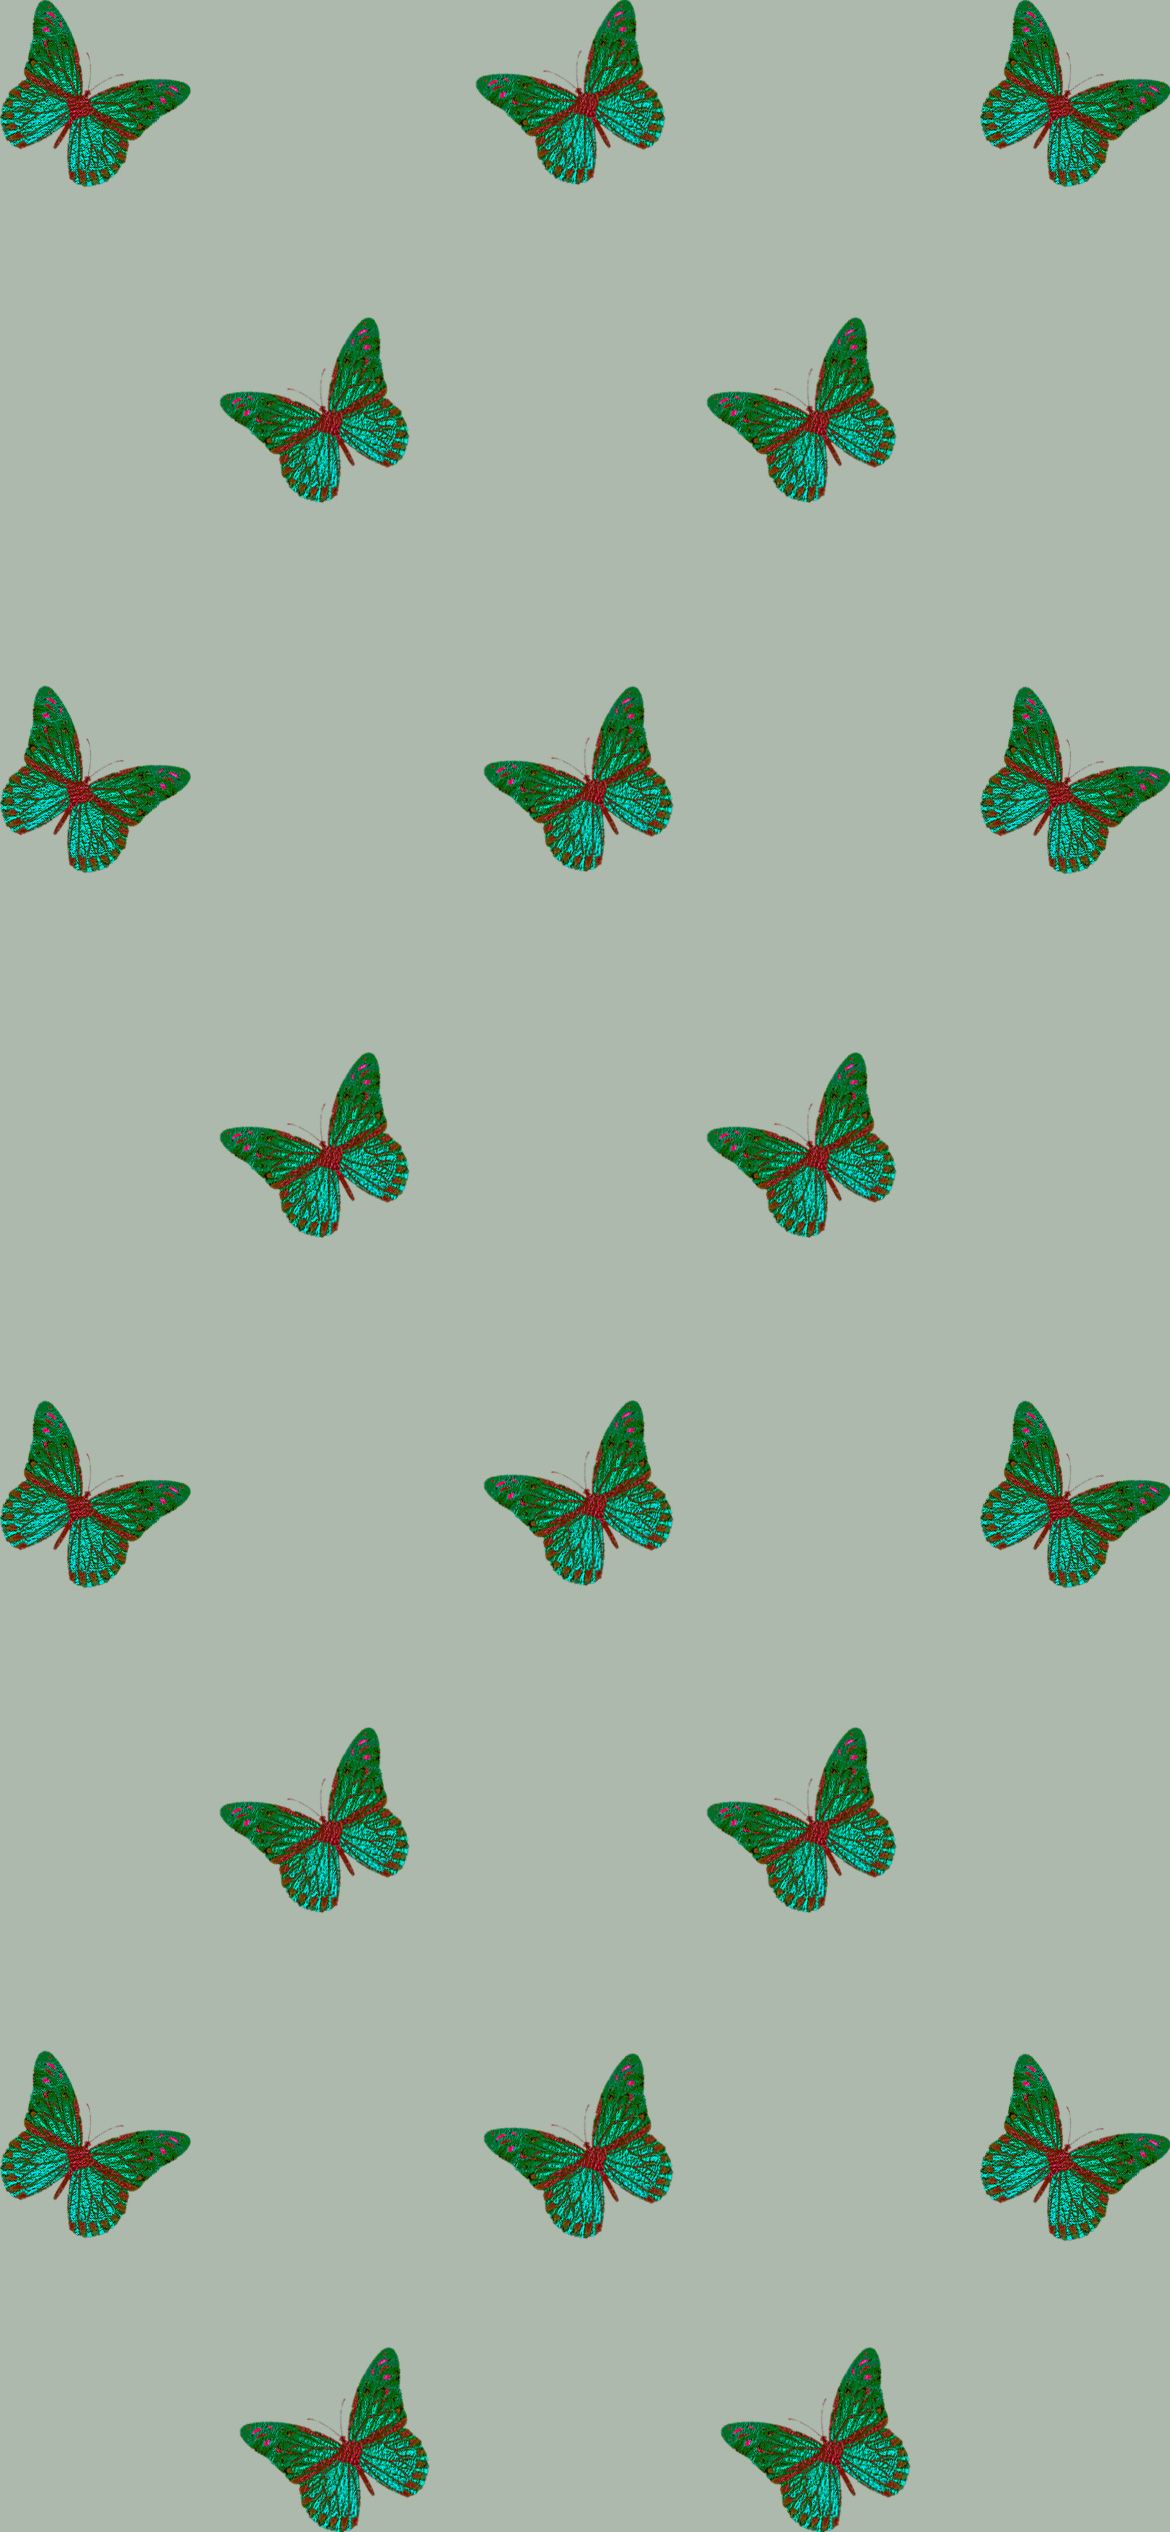 A pattern of green butterflies on a light green background - Butterfly, green, sage green, calming, simple